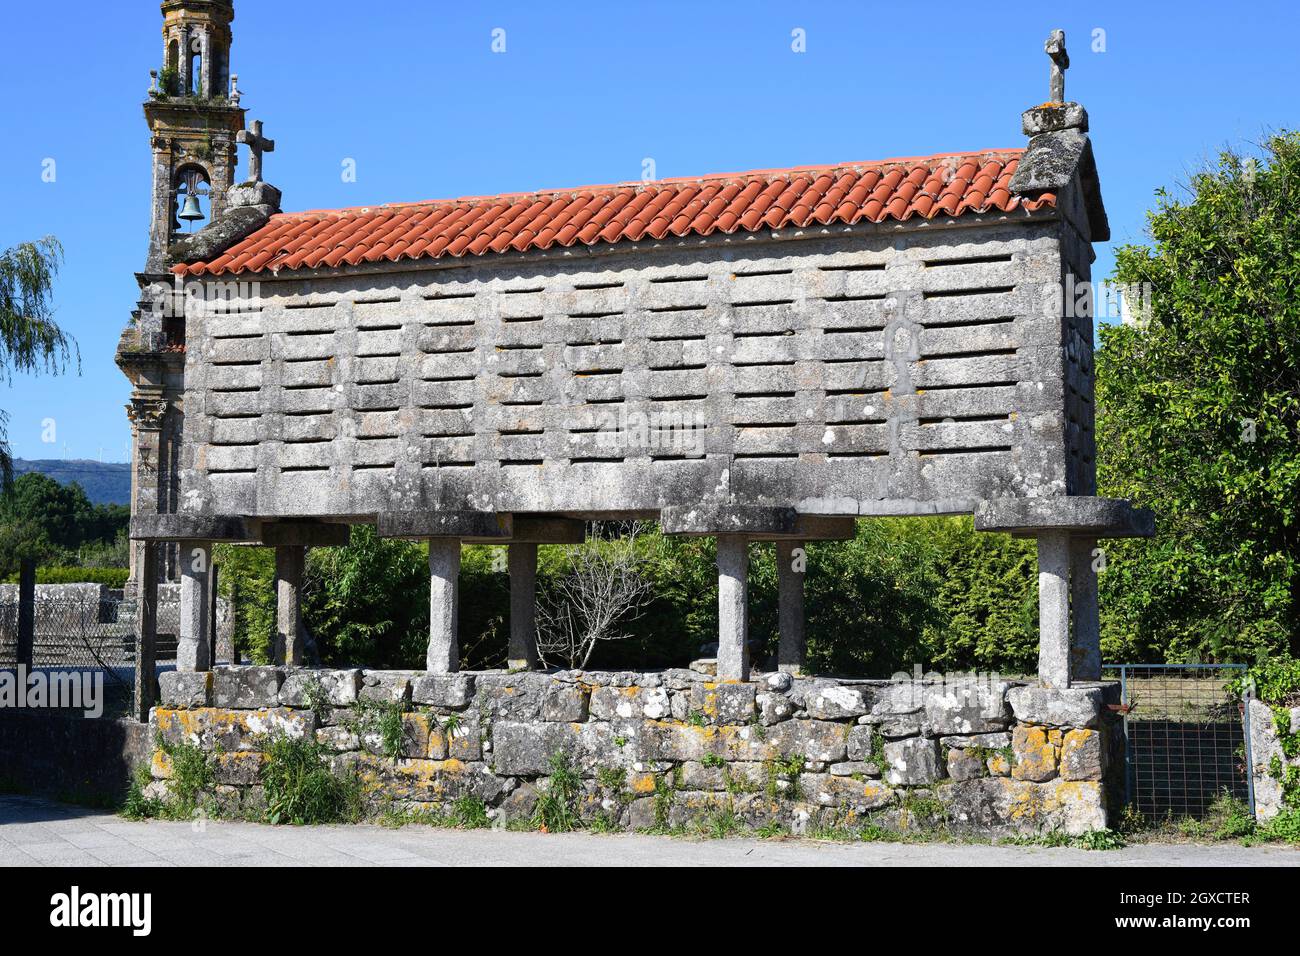 Traditional granary (horreo) of granite stone. Carnota, A Coruna, Galicia, Spain. Stock Photo